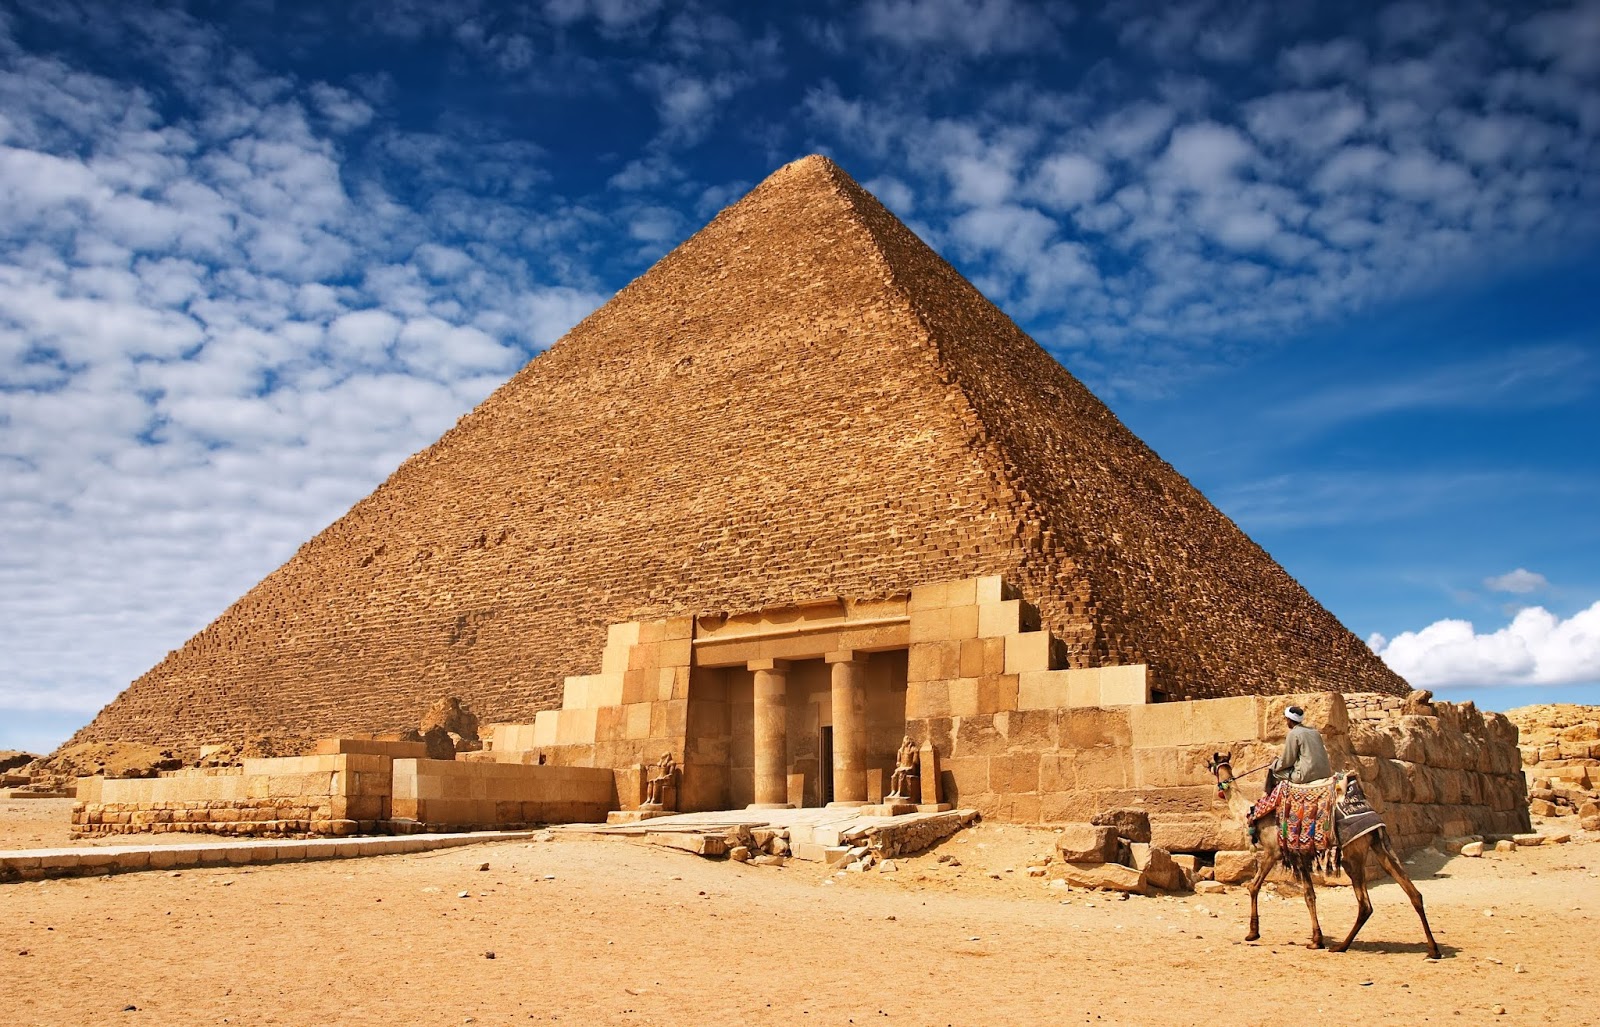 Bank misr. Пирамида Хеопса (Хуфу). 7 Чудес света пирамида Хеопса. Пирамида Хуфу Египет. Семь чудес света пирамида Хэопс.